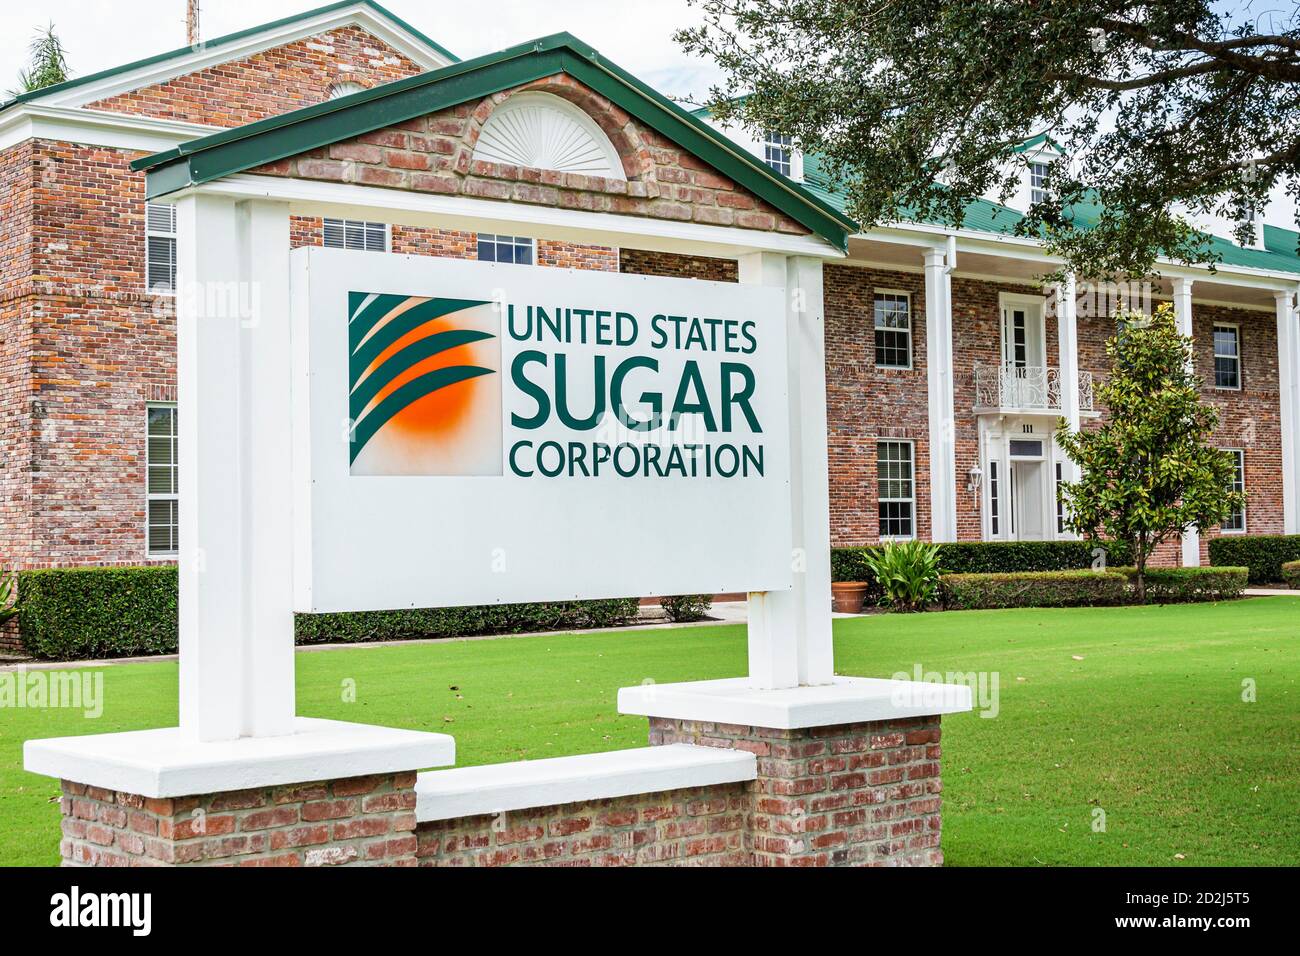 Florida,Clewiston,U.S. Sugar Corporation,agriculture business